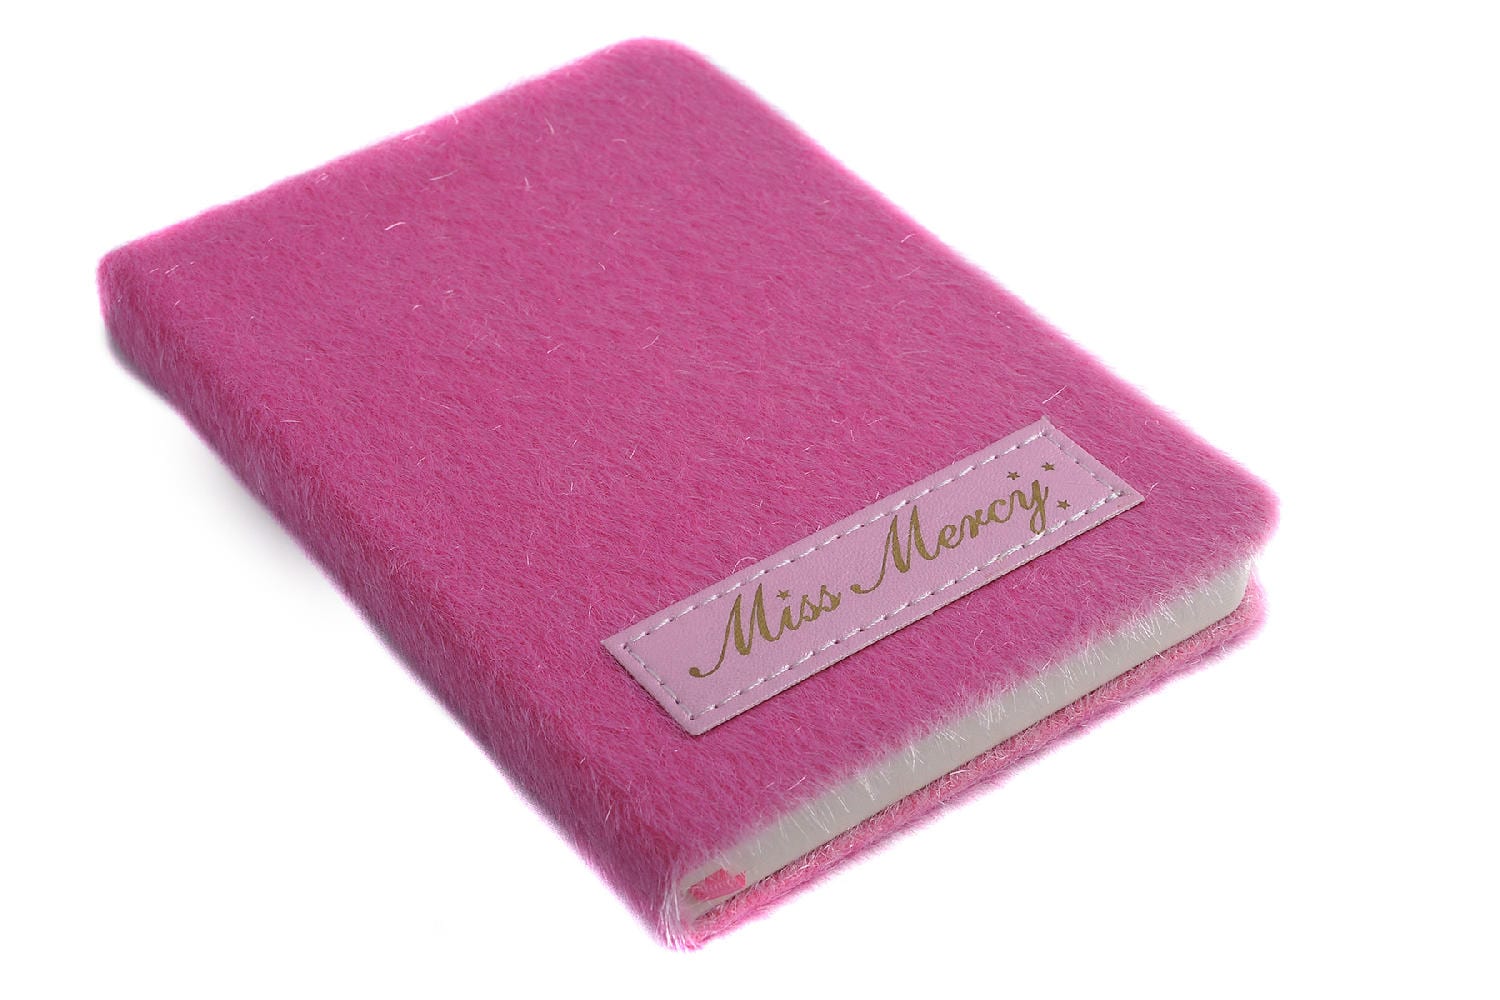 branded notebooks sewn label on felt cover